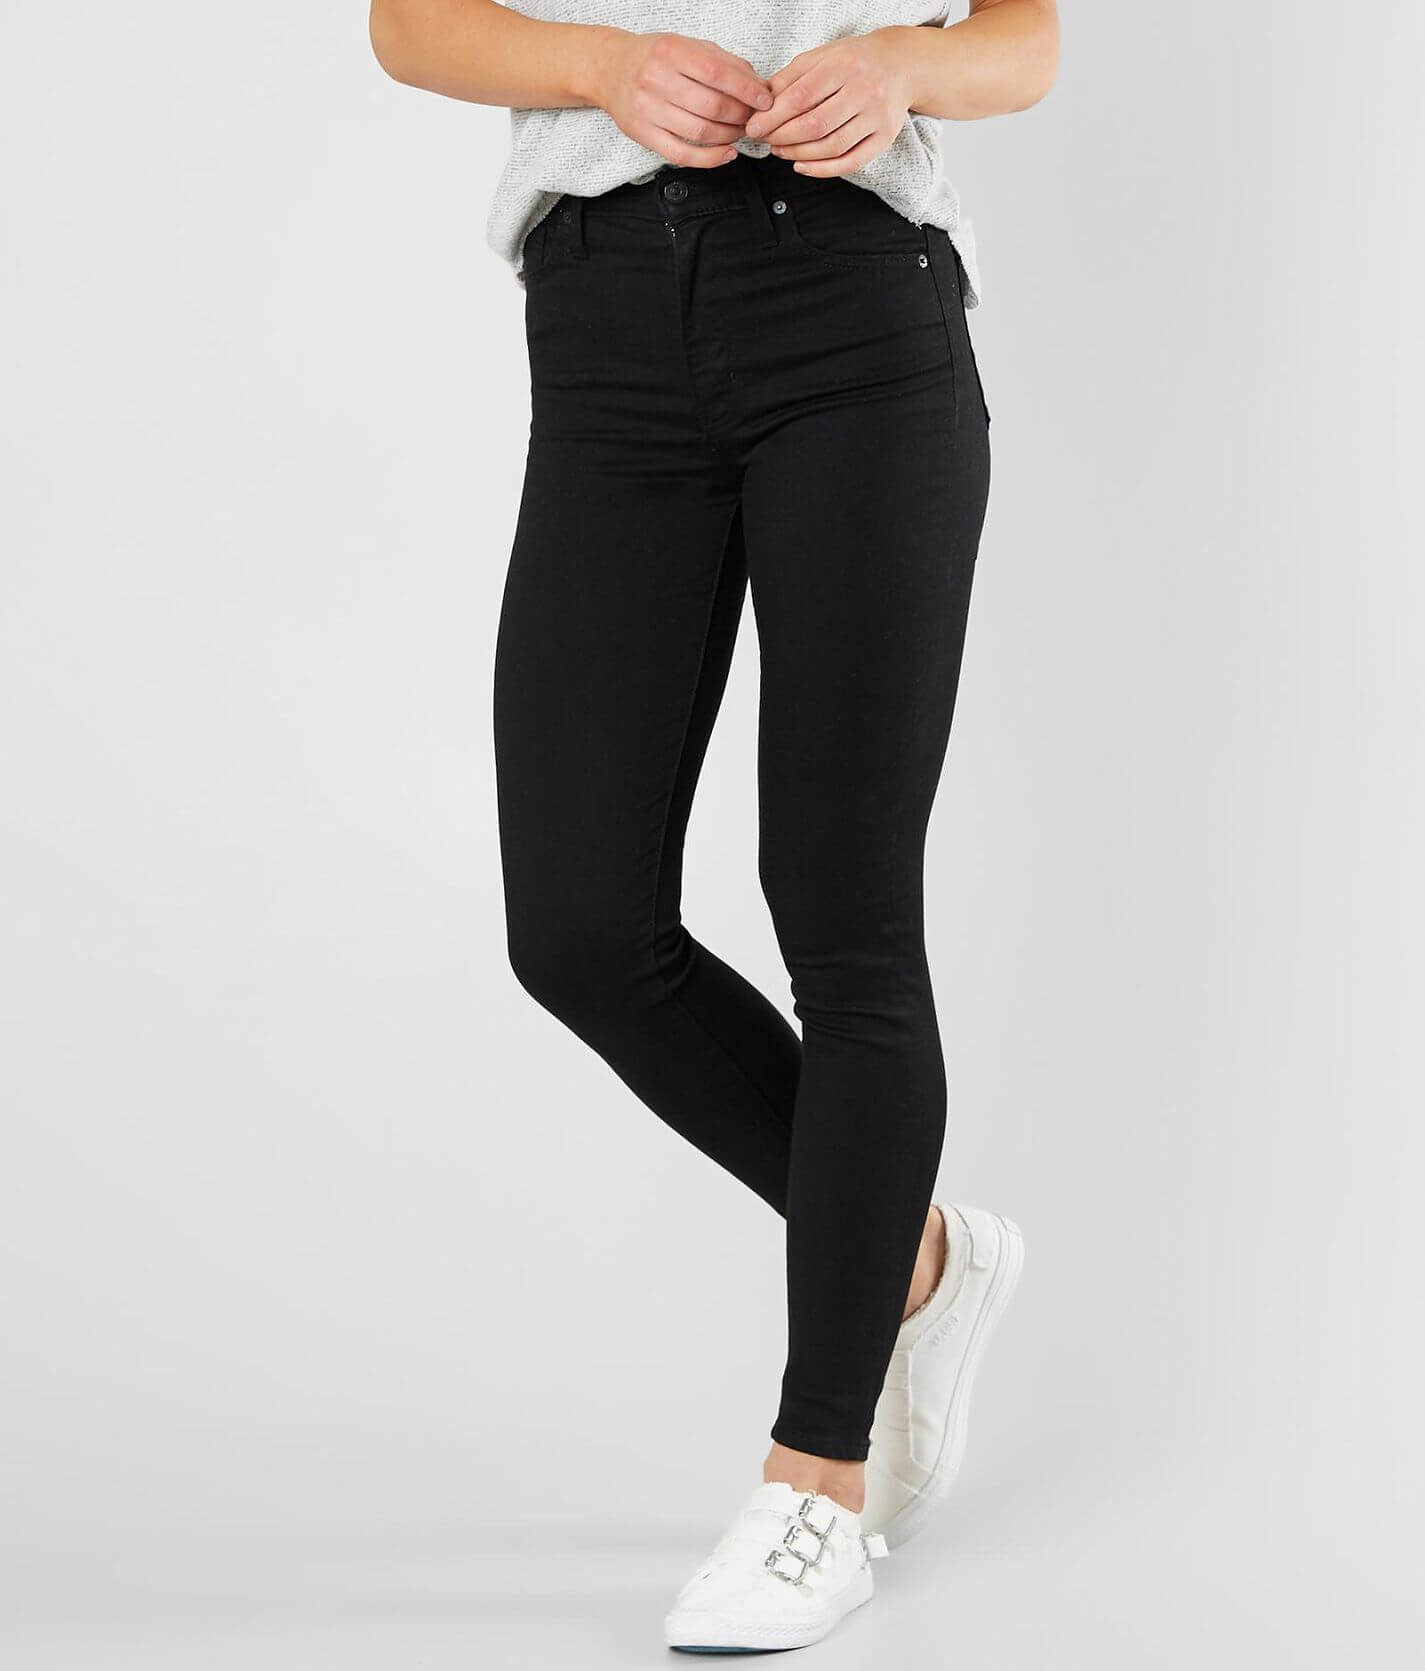 Levi's® Mile High Super Skinny Jean - Women's Jeans in Black Galaxy | Buckle